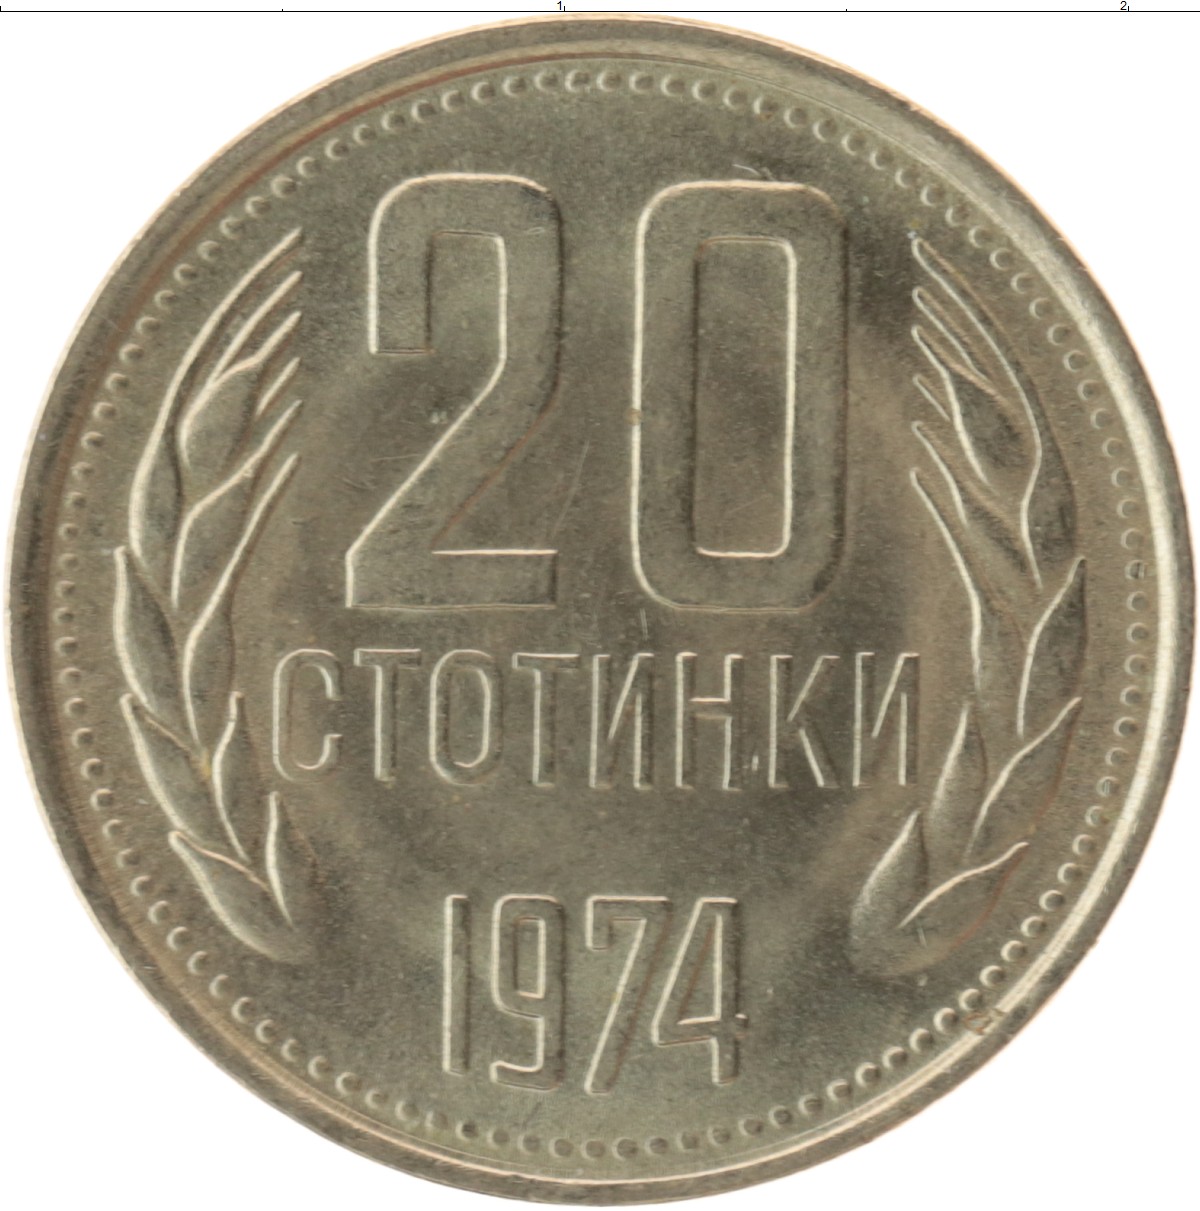 10 ен в рублях. 500 Йен 2008. 20 Стотинок 1974 Болгария. Монеты Японии 500 йен. Китайская монета 500 йен.